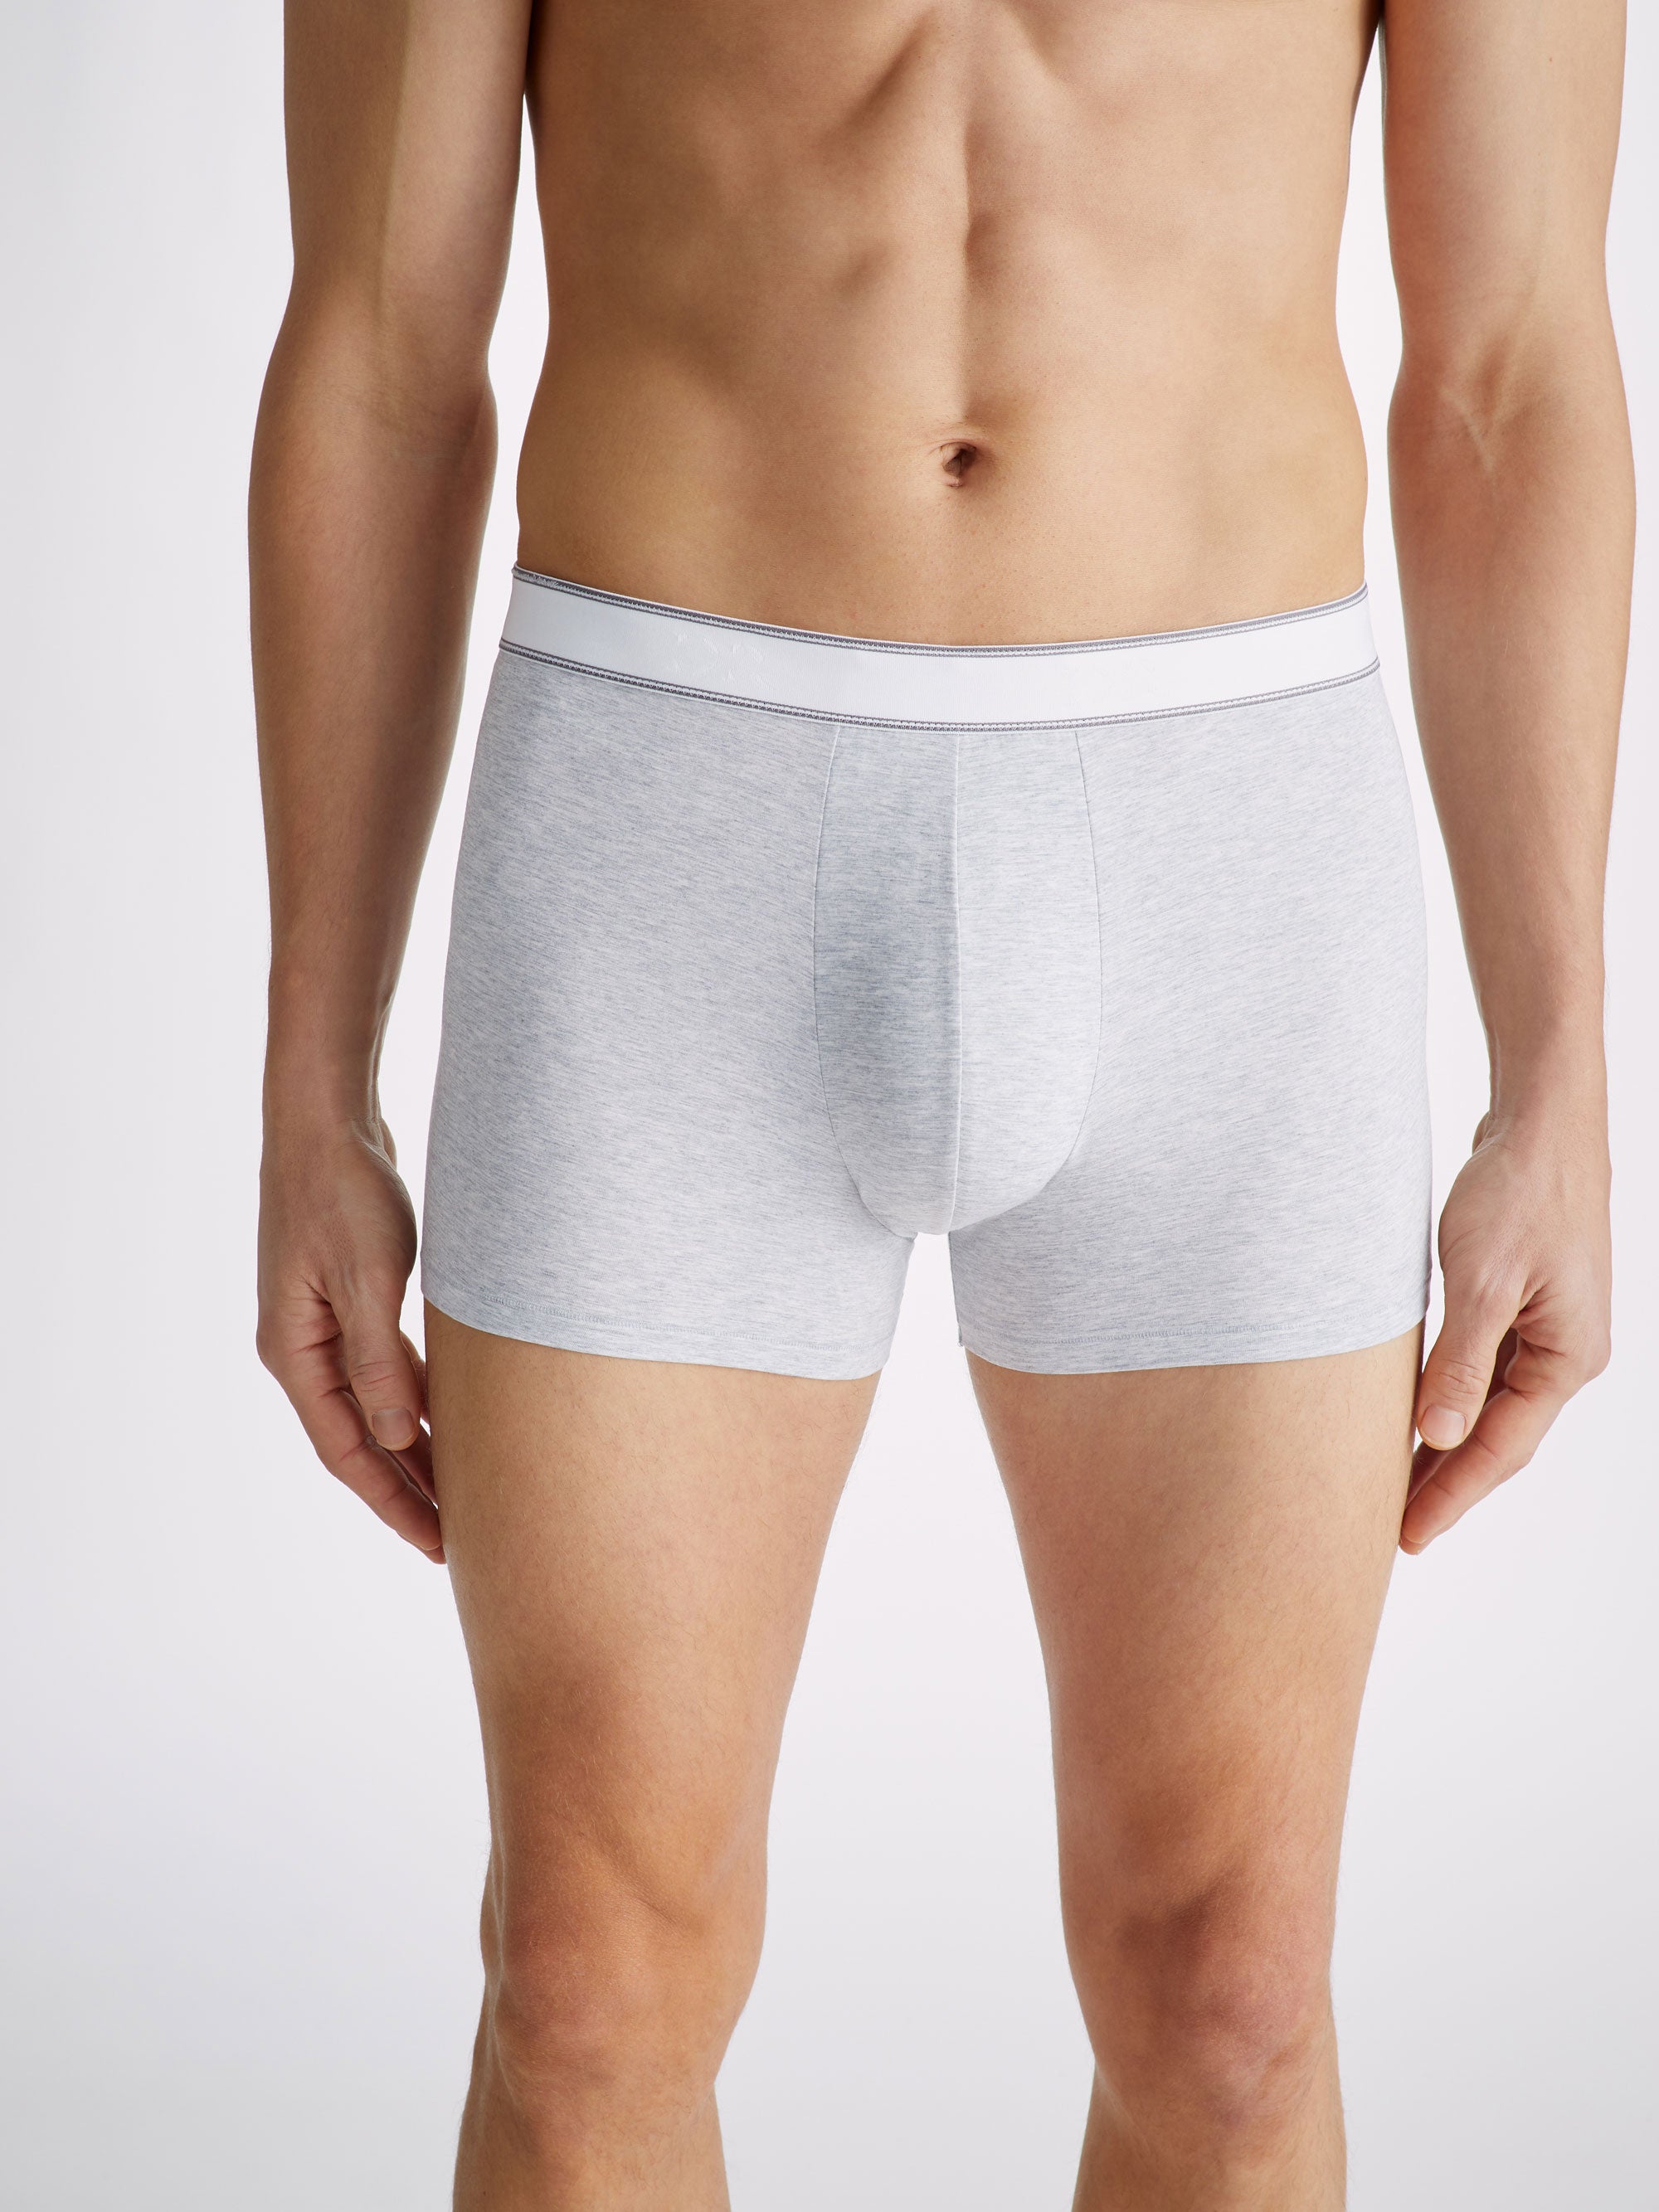 Buy Boxer Shorts In Ghana, Mens Underwear